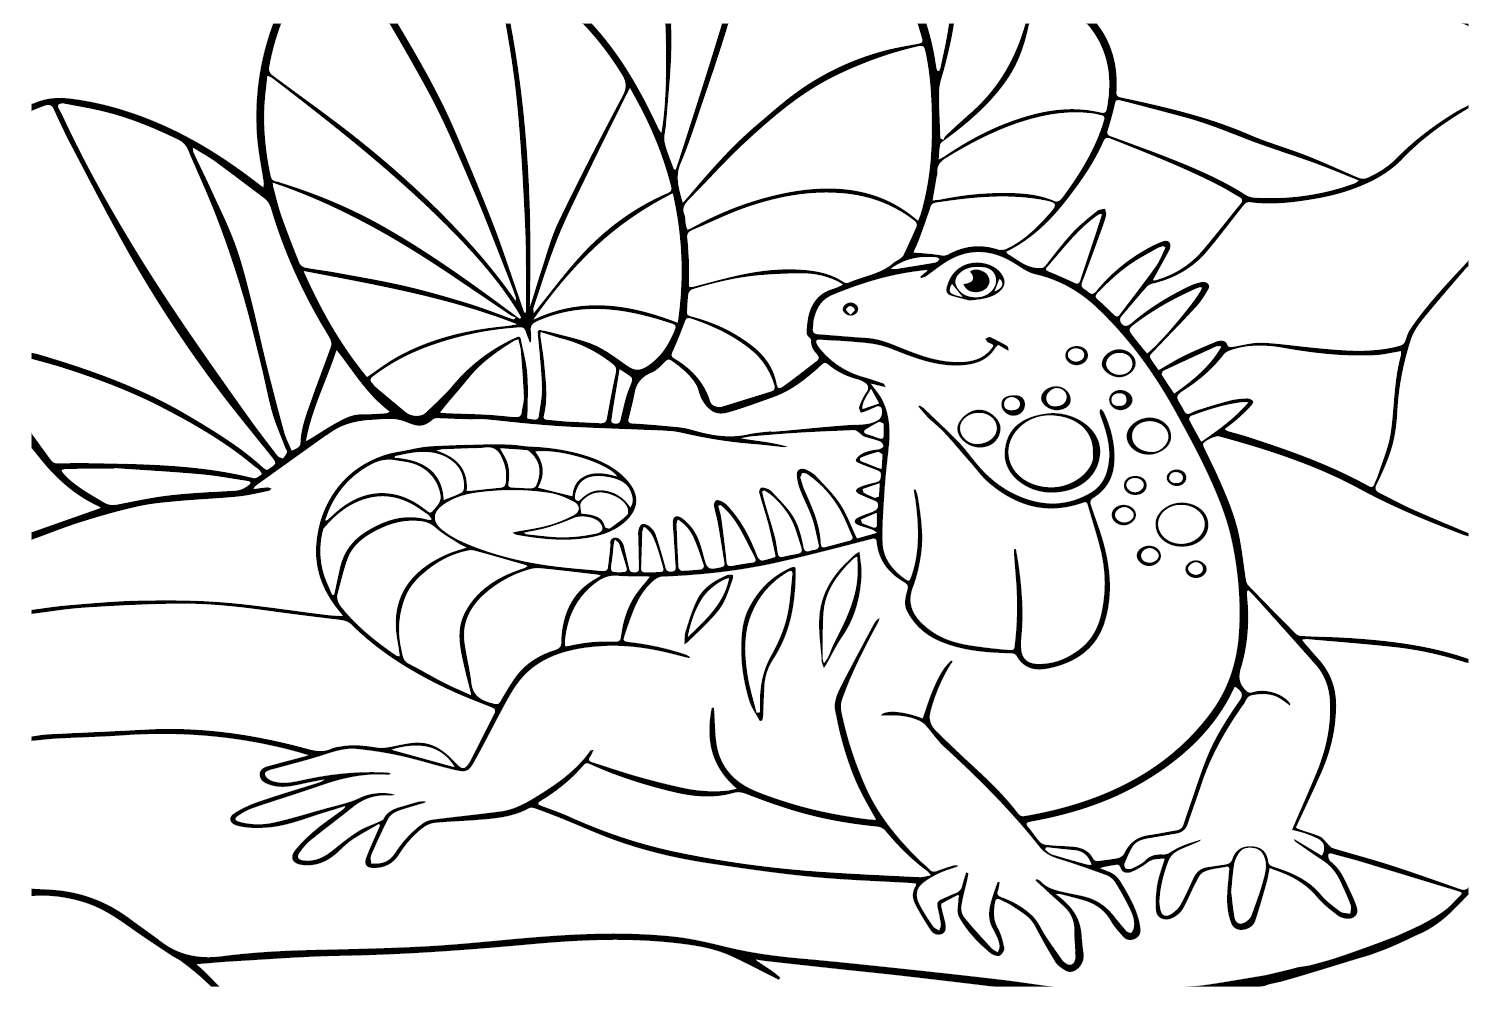 Iguana-kleurplaat van Iguana